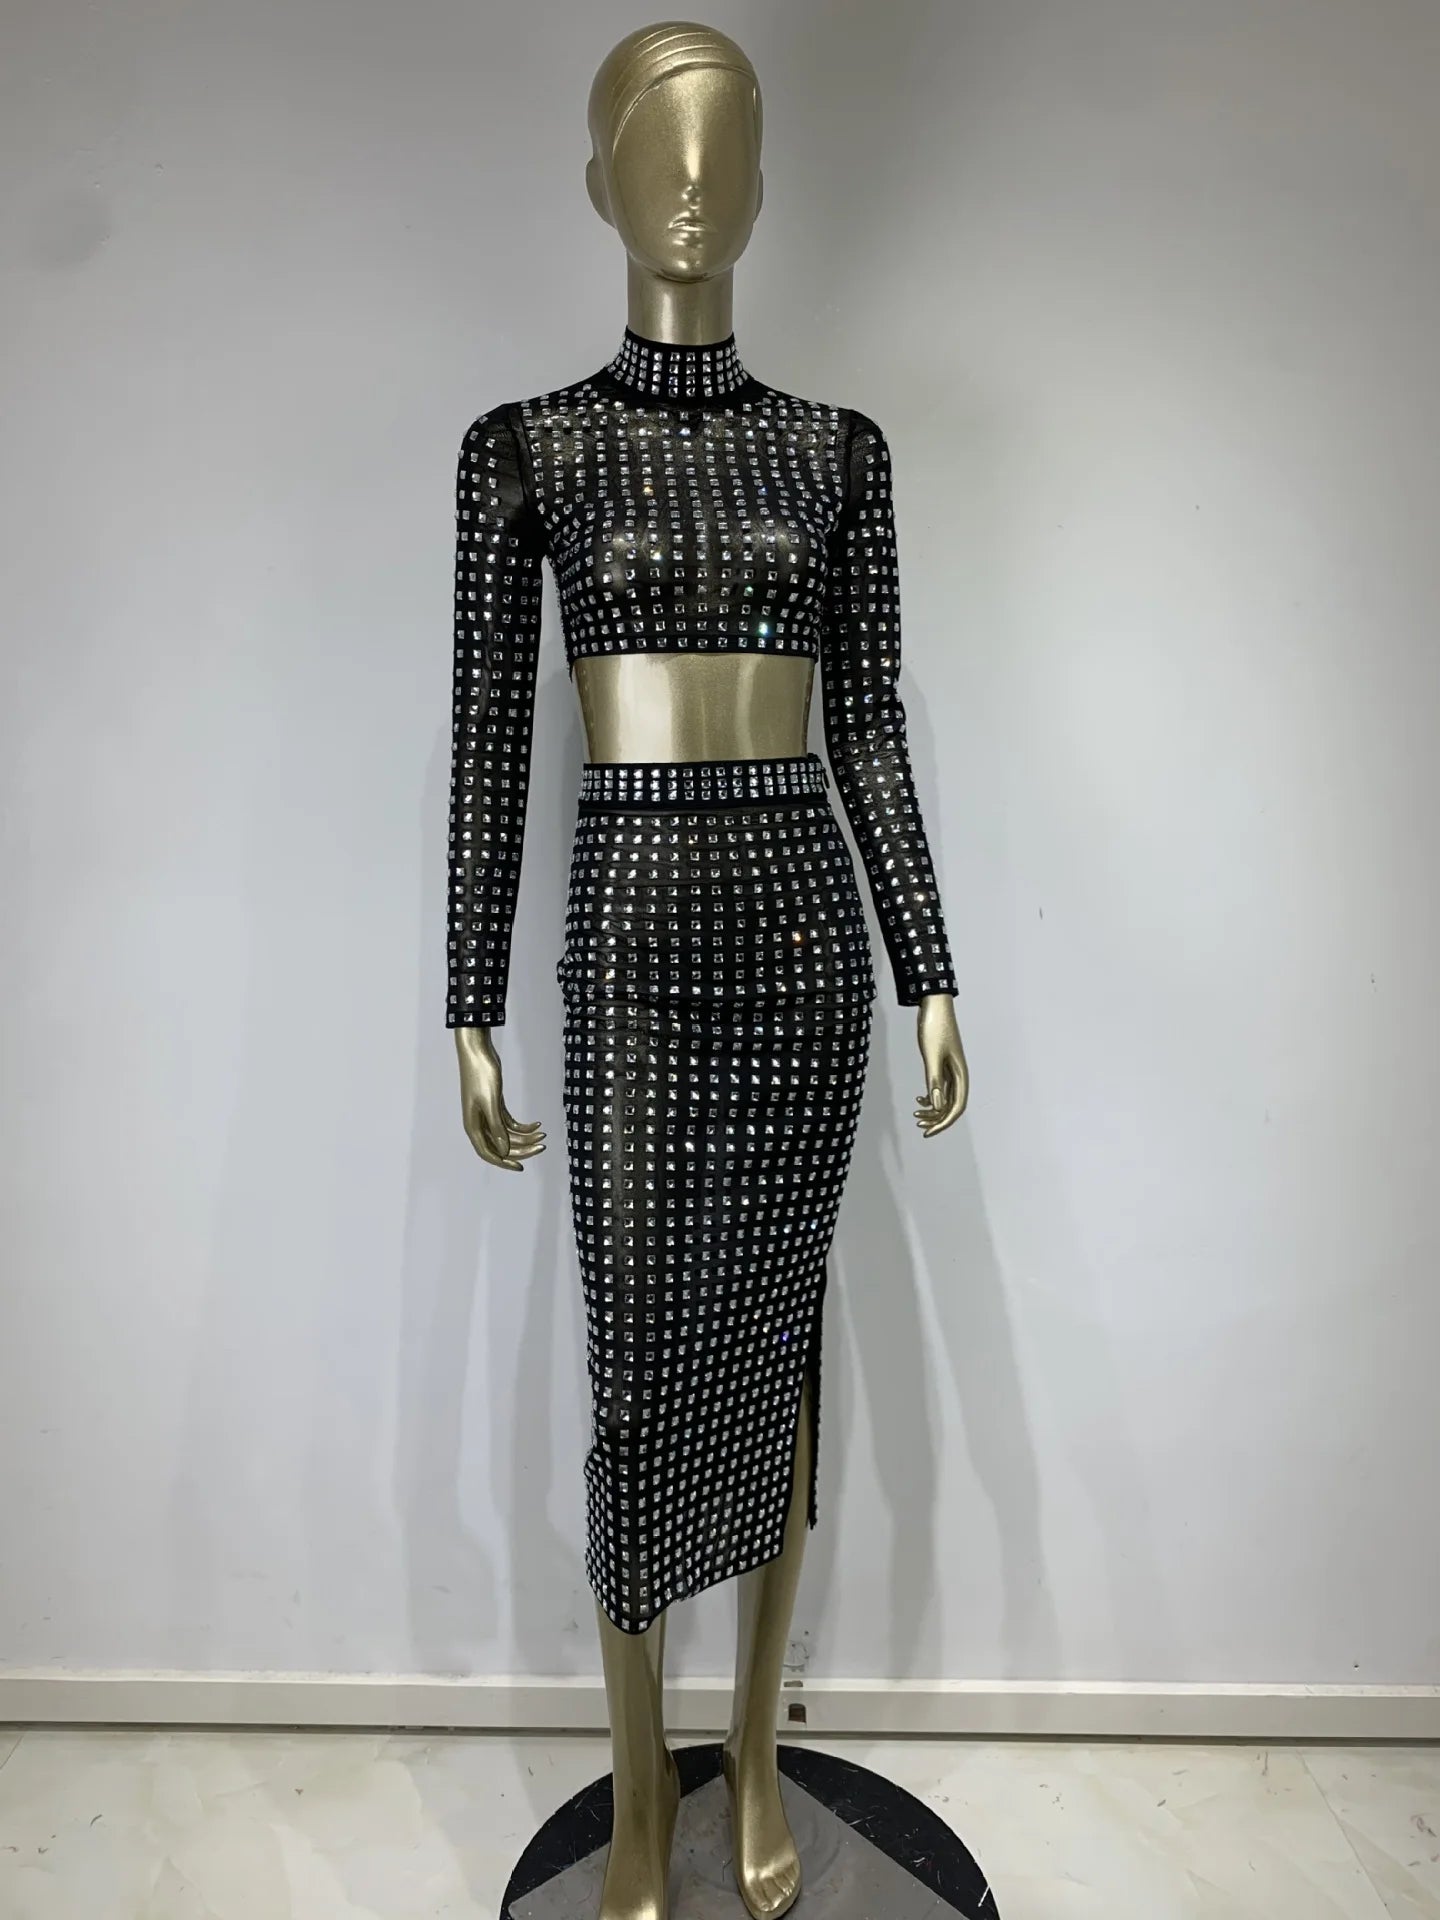 Hot Girl Women's Fashion Rivet Elastic Tight Skirt Suit aclosy